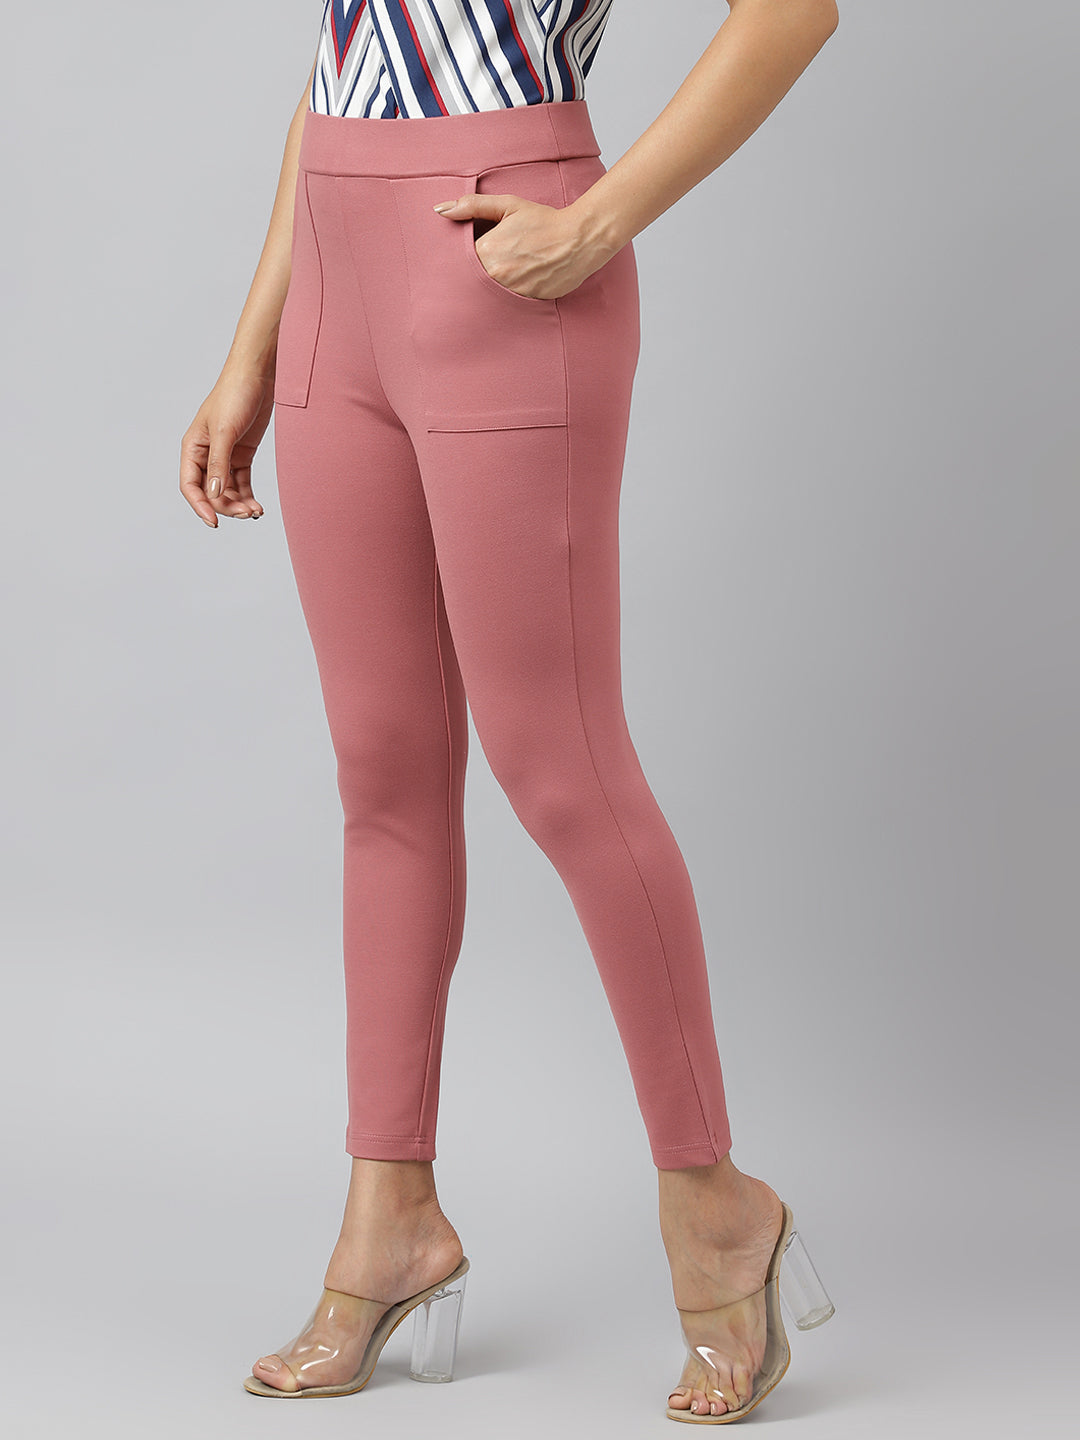 Pink Solid Ankle Length Jegging With Pocket